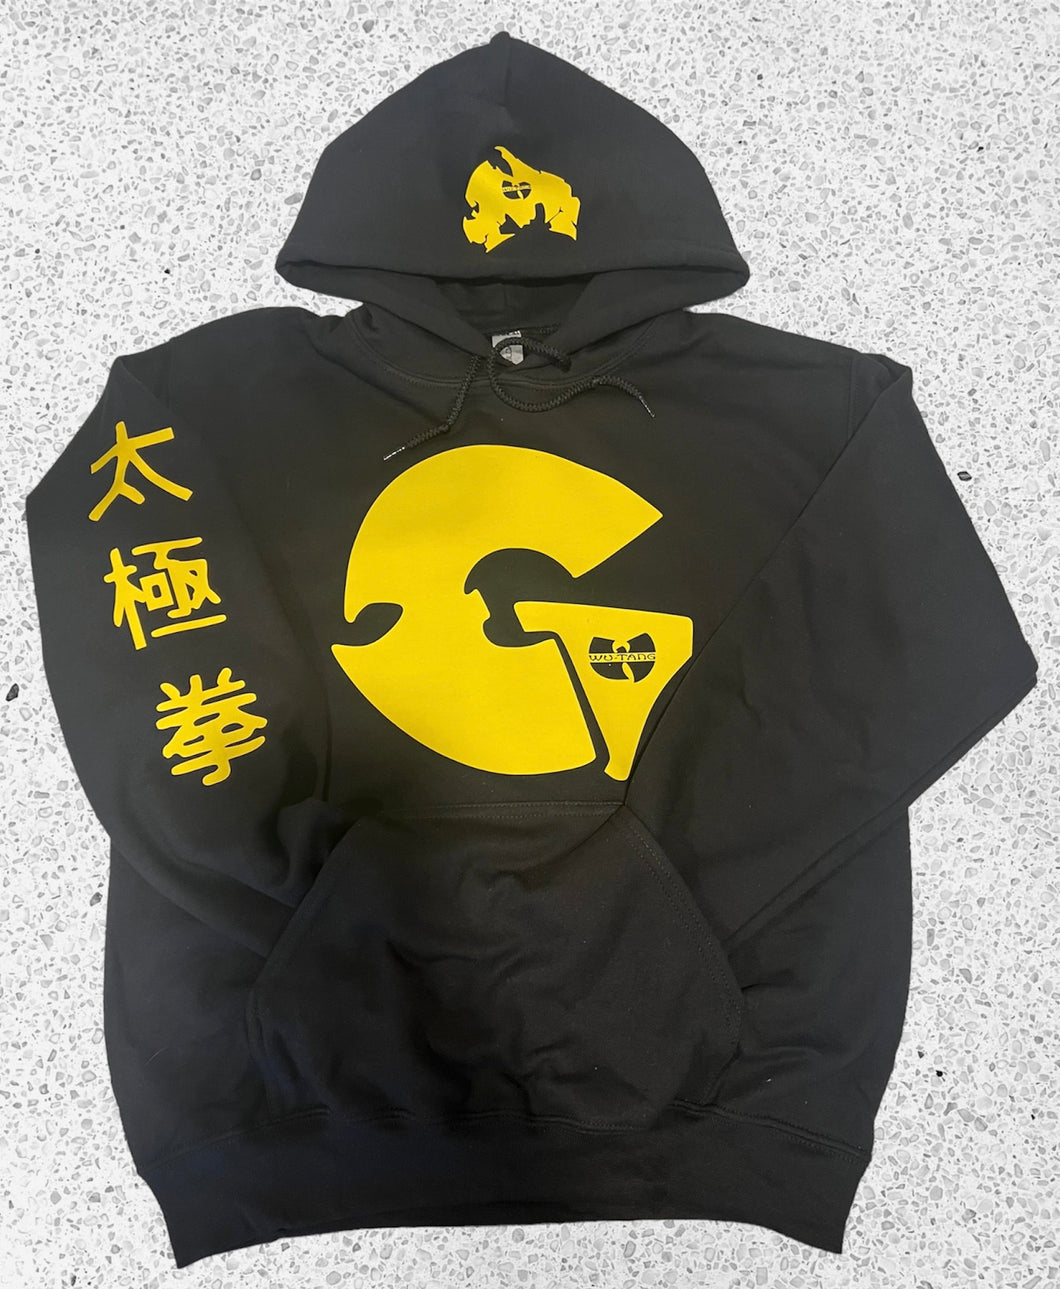 Wu-tang /Gza shadowboxin pullover Limited edition